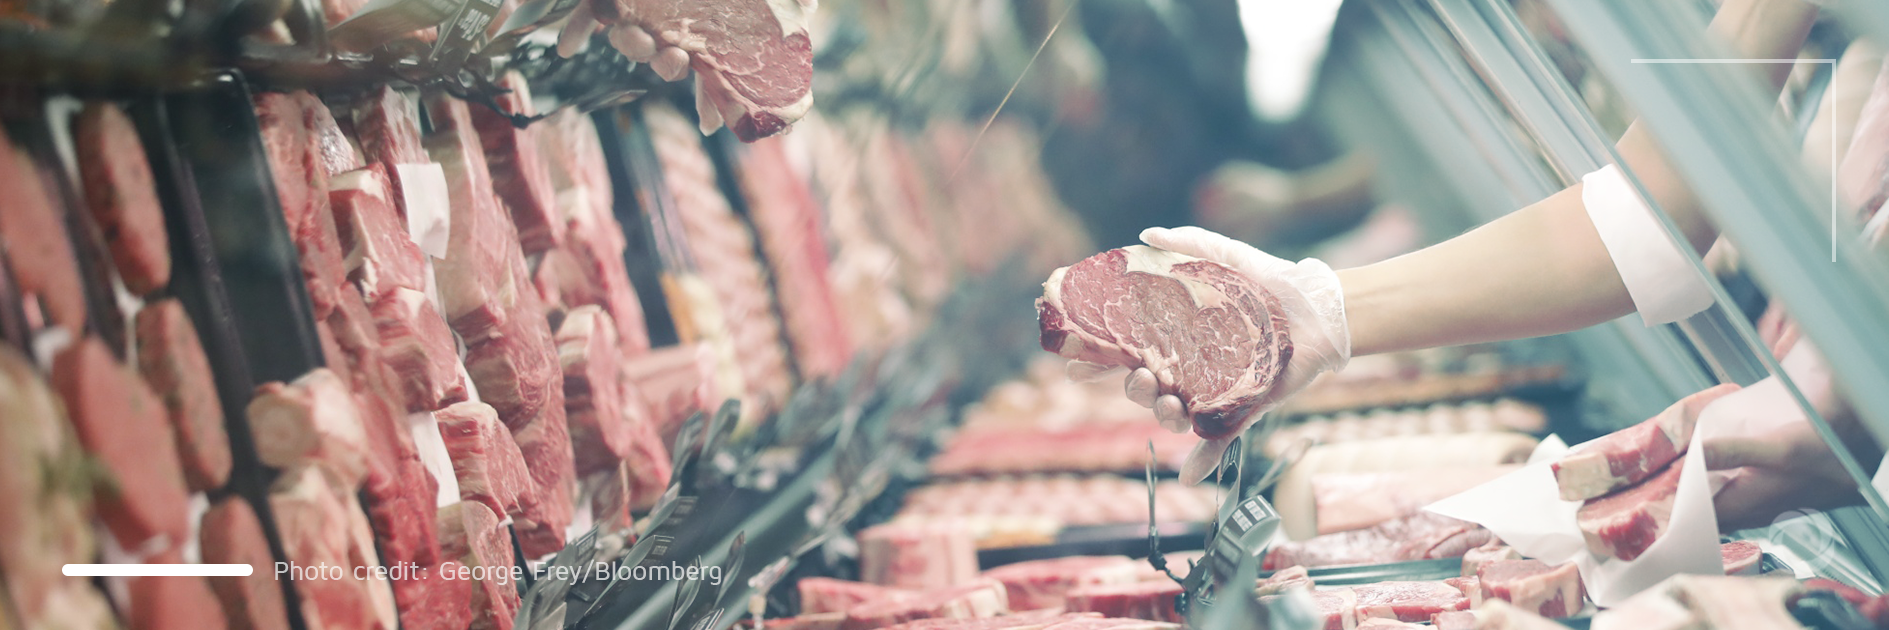 European supermarkets ban Brazilian beef over deforestation-linked production